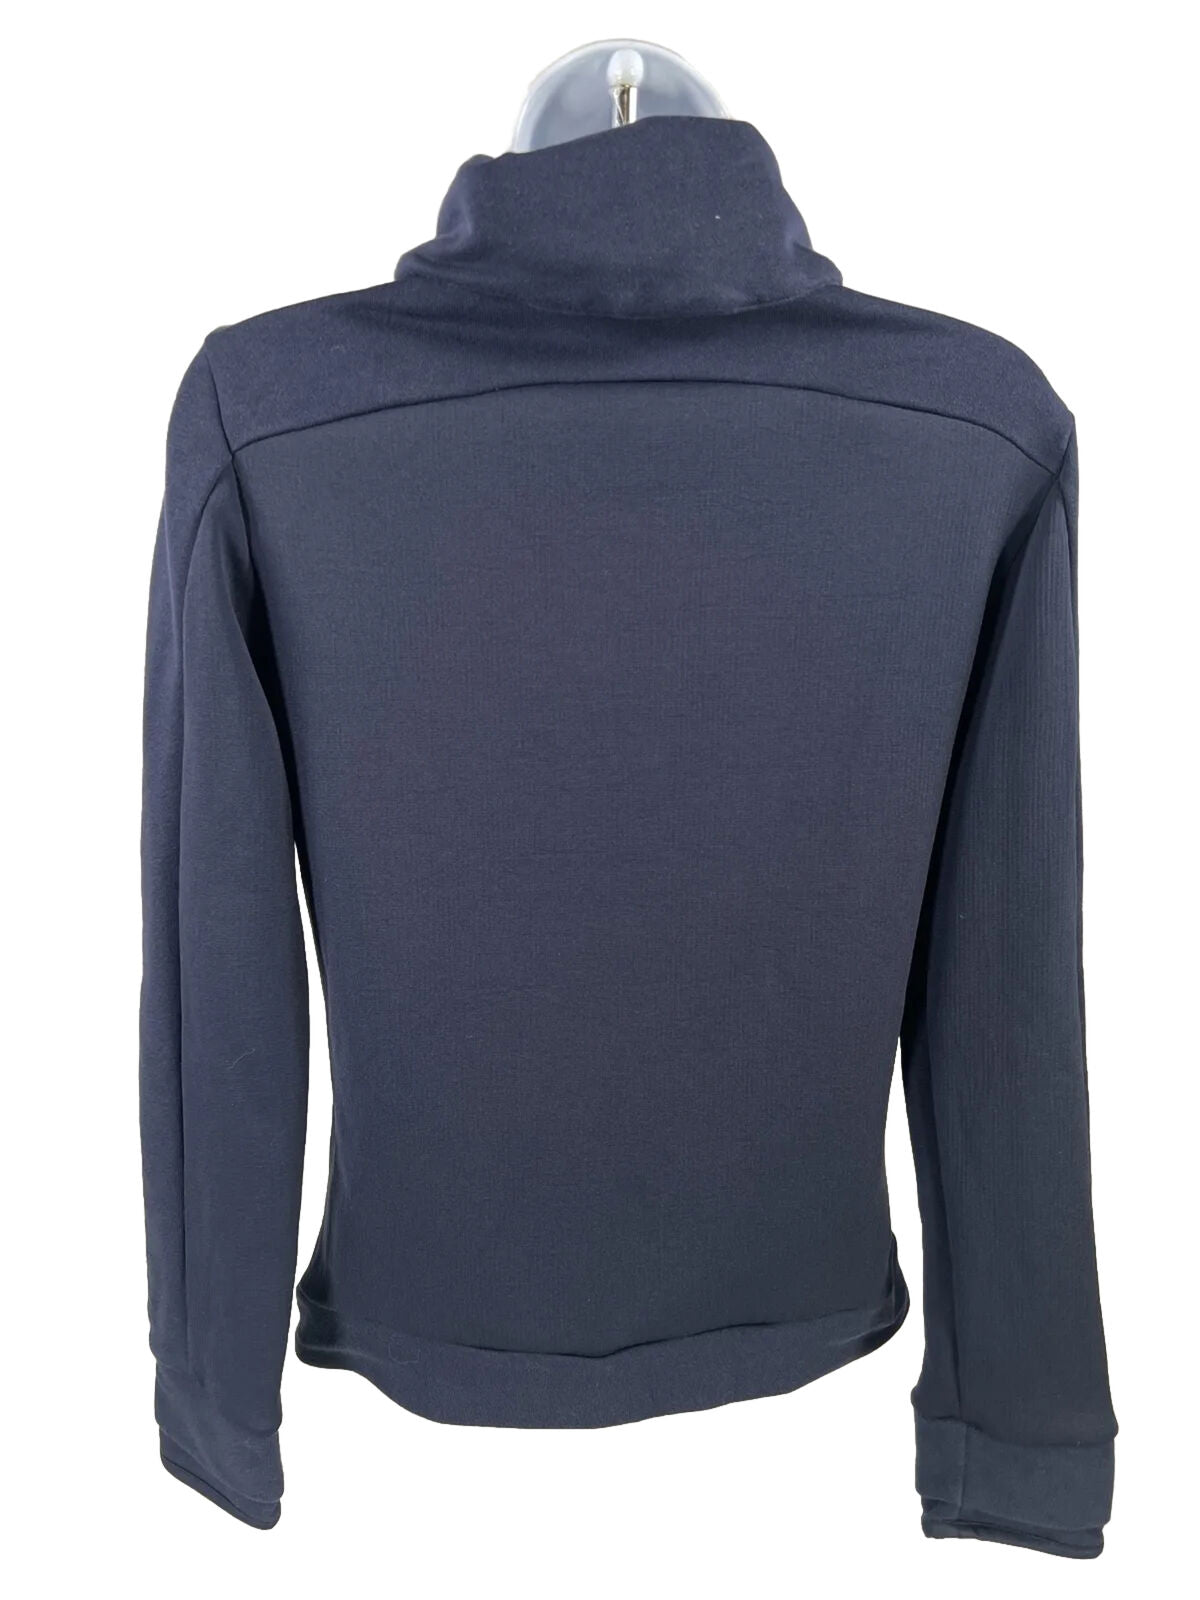 Adidas Women's Navy Blue Long Sleeve Full Zip Sweatshirt - XS